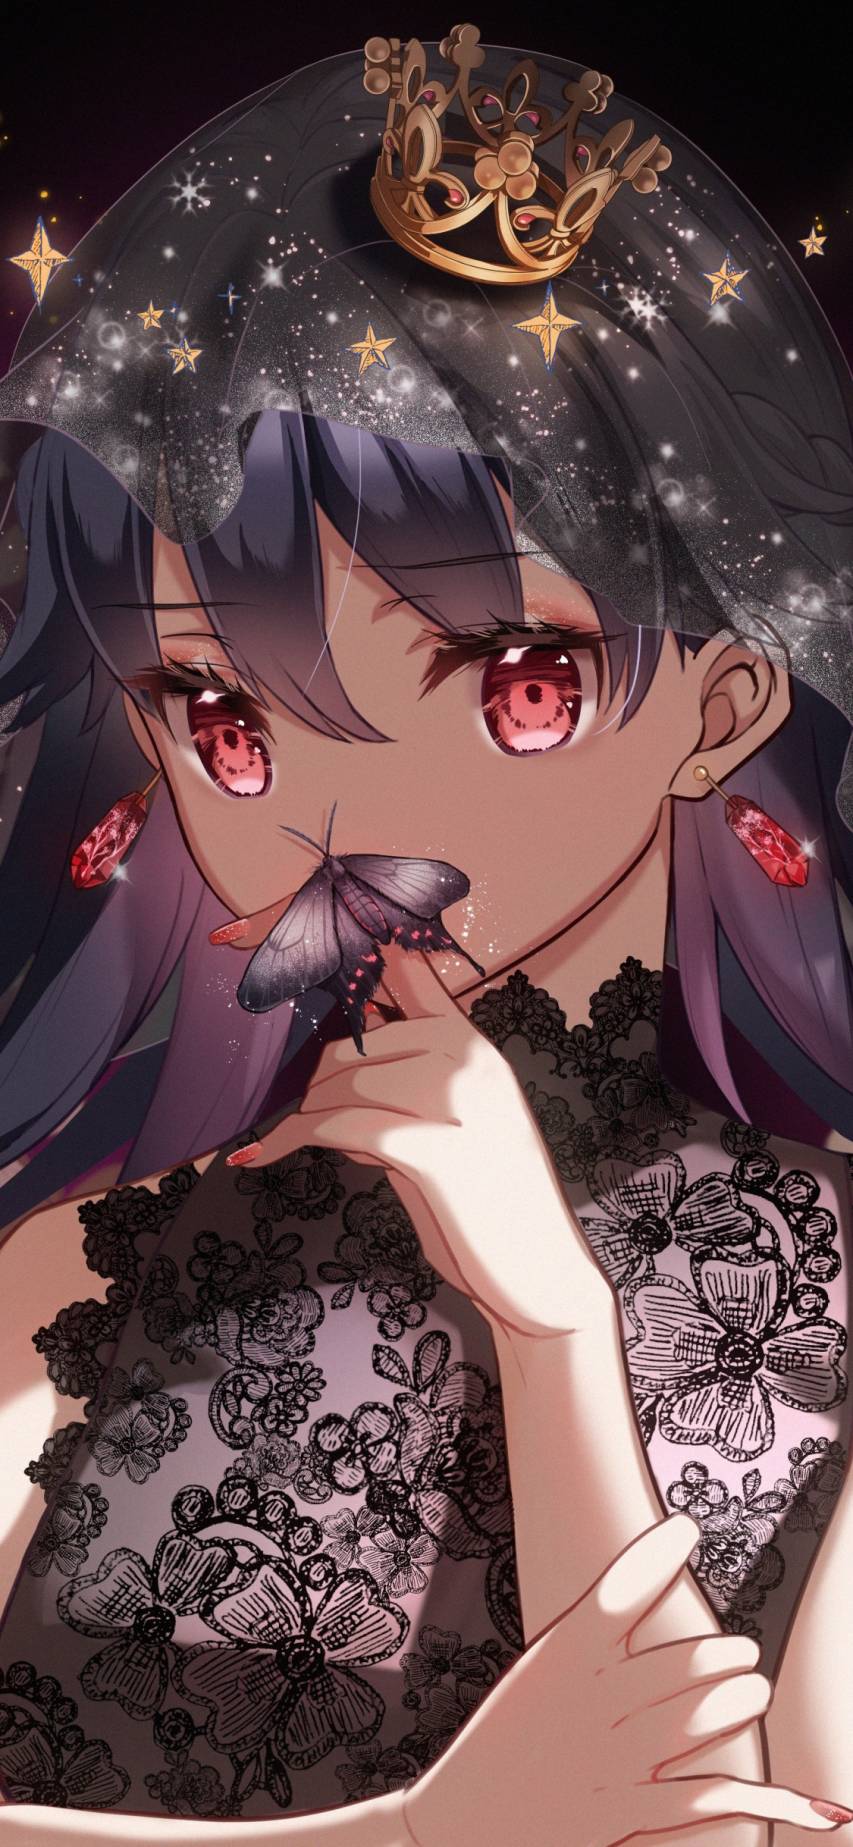 Cute Anime Girl Beautiful Background Wallpaper 7 by NWAwalrus on DeviantArt